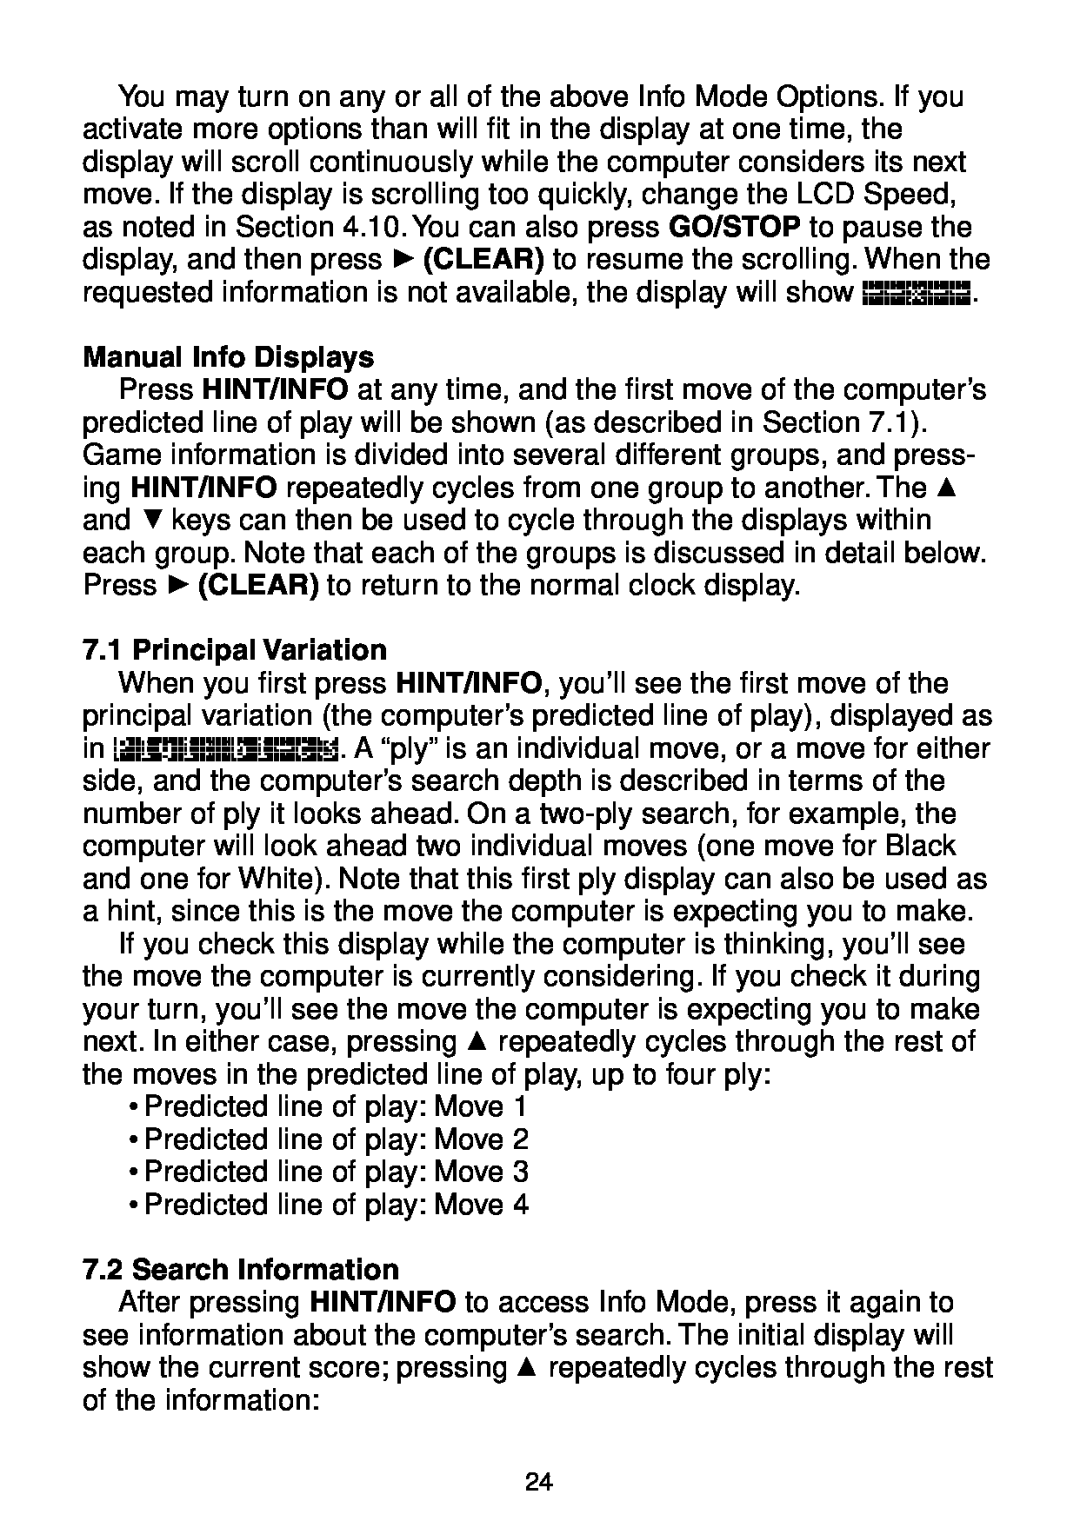 Saitek Maestro Travel Chess Computer manual Manual Info Displays, Principal Variation, Search Information 